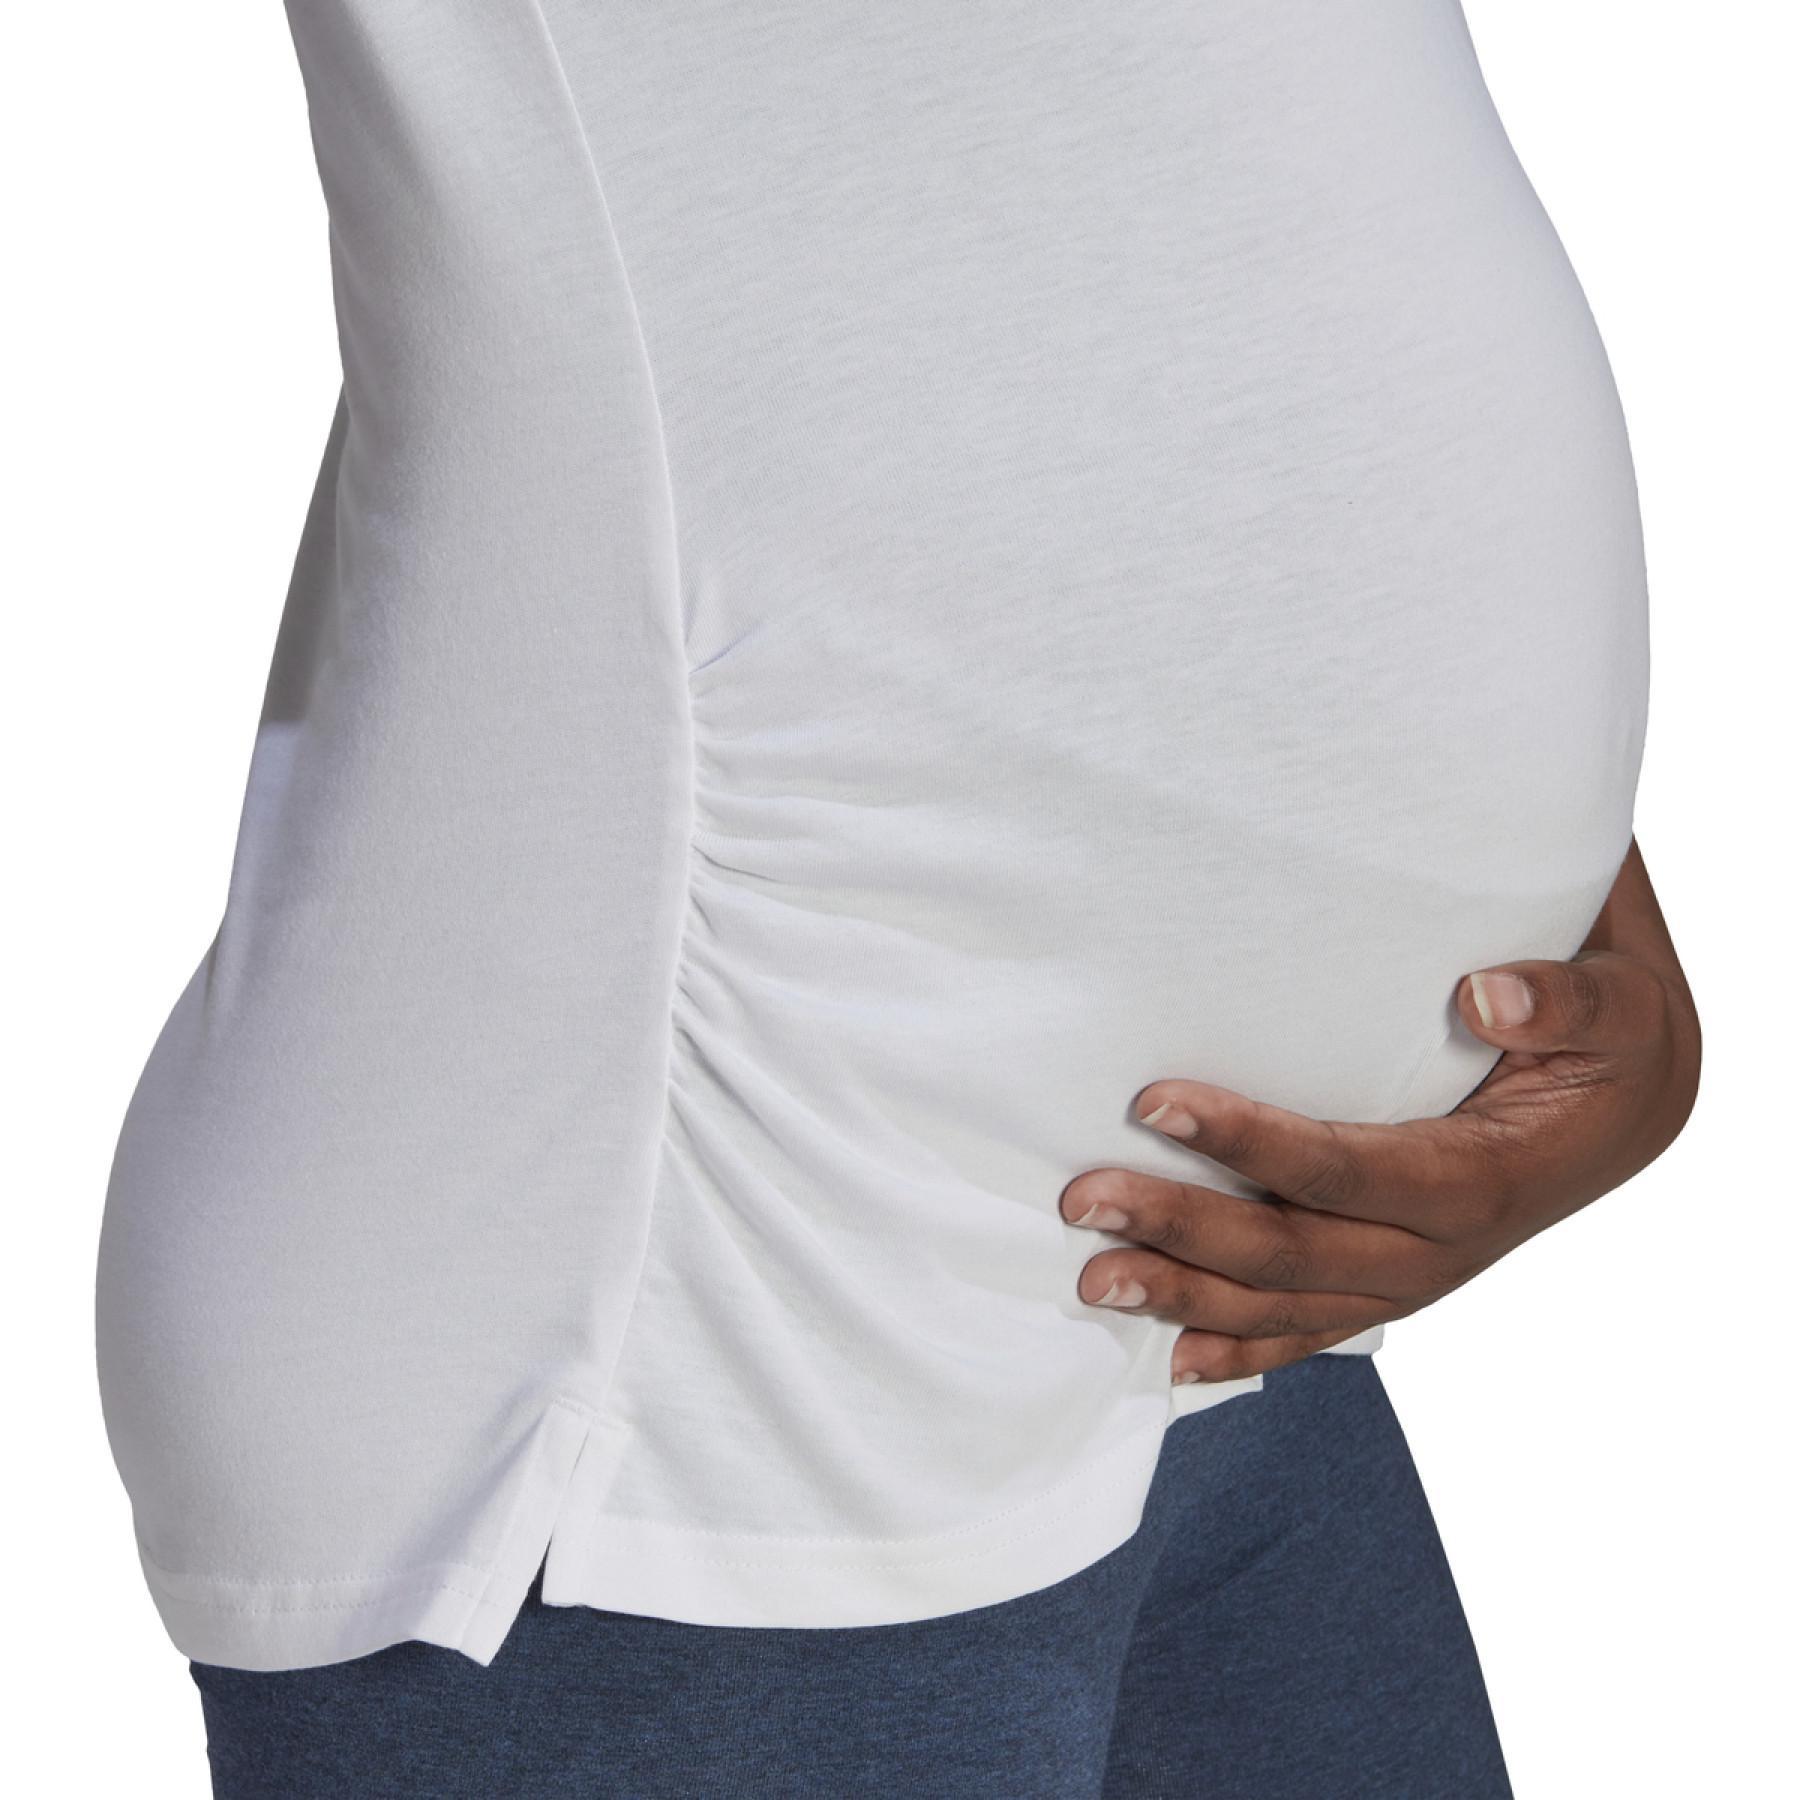 Maglietta da donna adidas Essentials Cotton Maternité